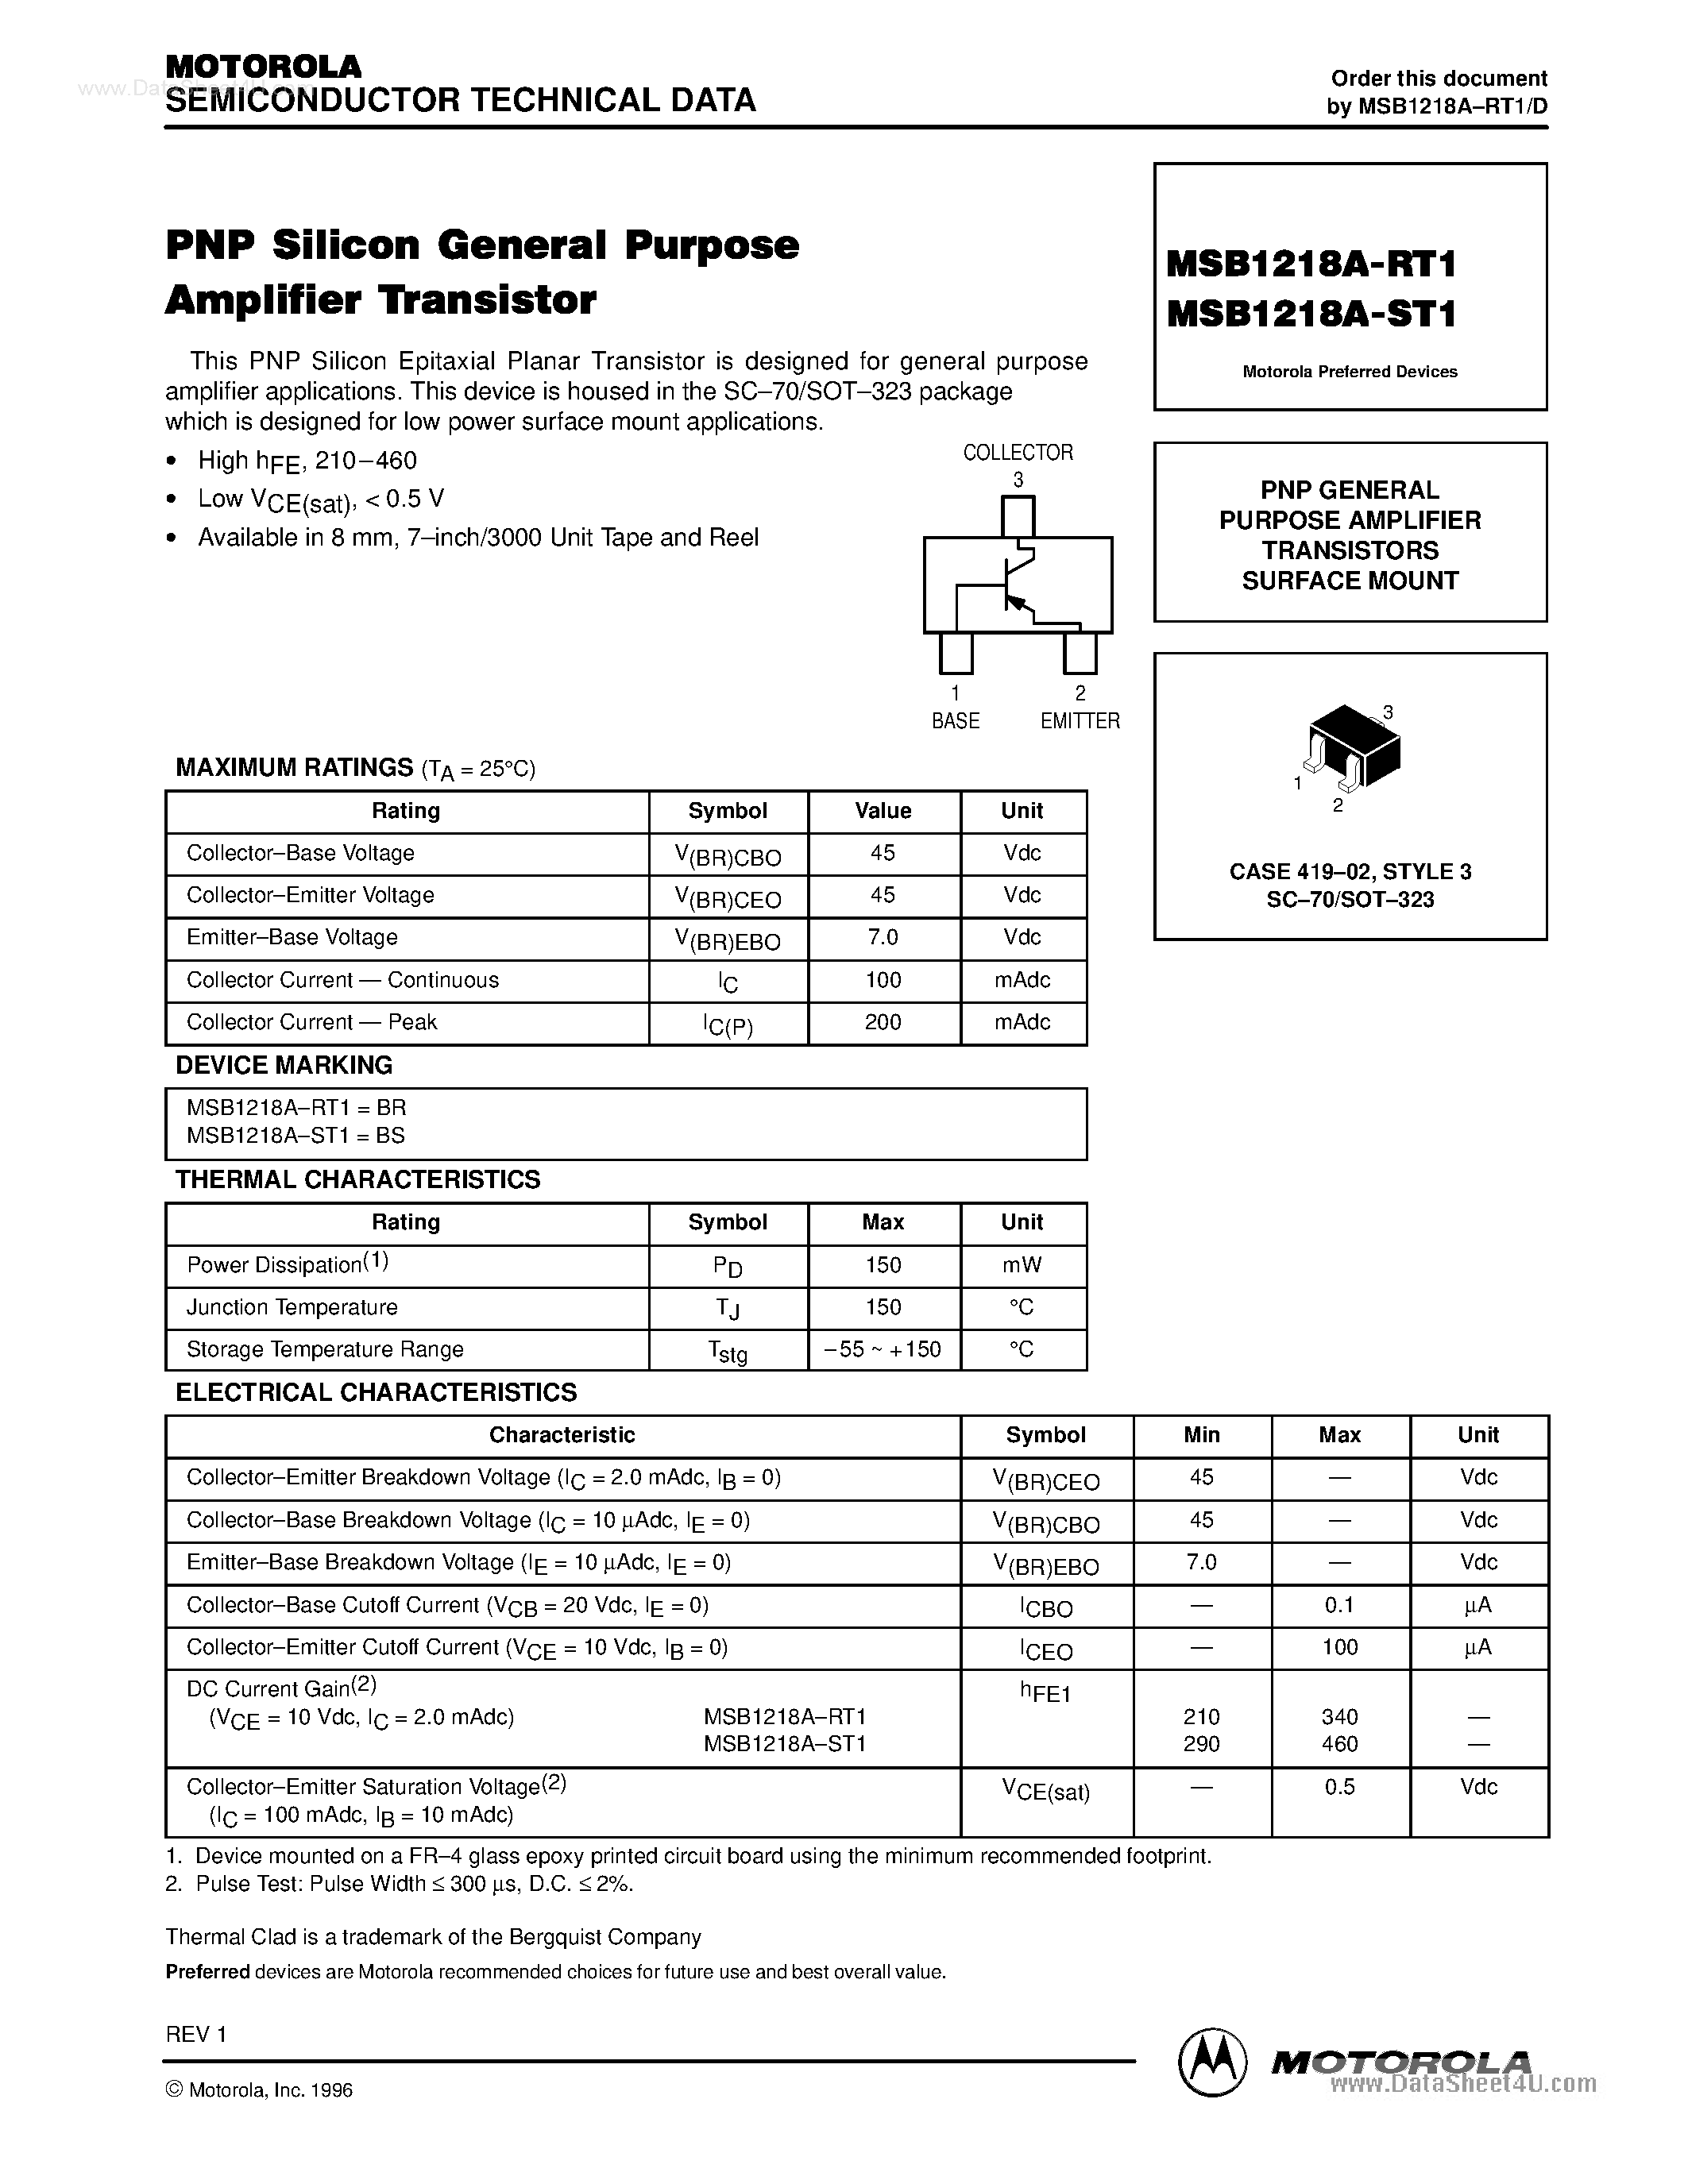 Datasheet MSB1218A-RT1 - PNP GENERAL PURPOSE AMPLIFIER TRANSISTORS SURFACE MOUNT page 1